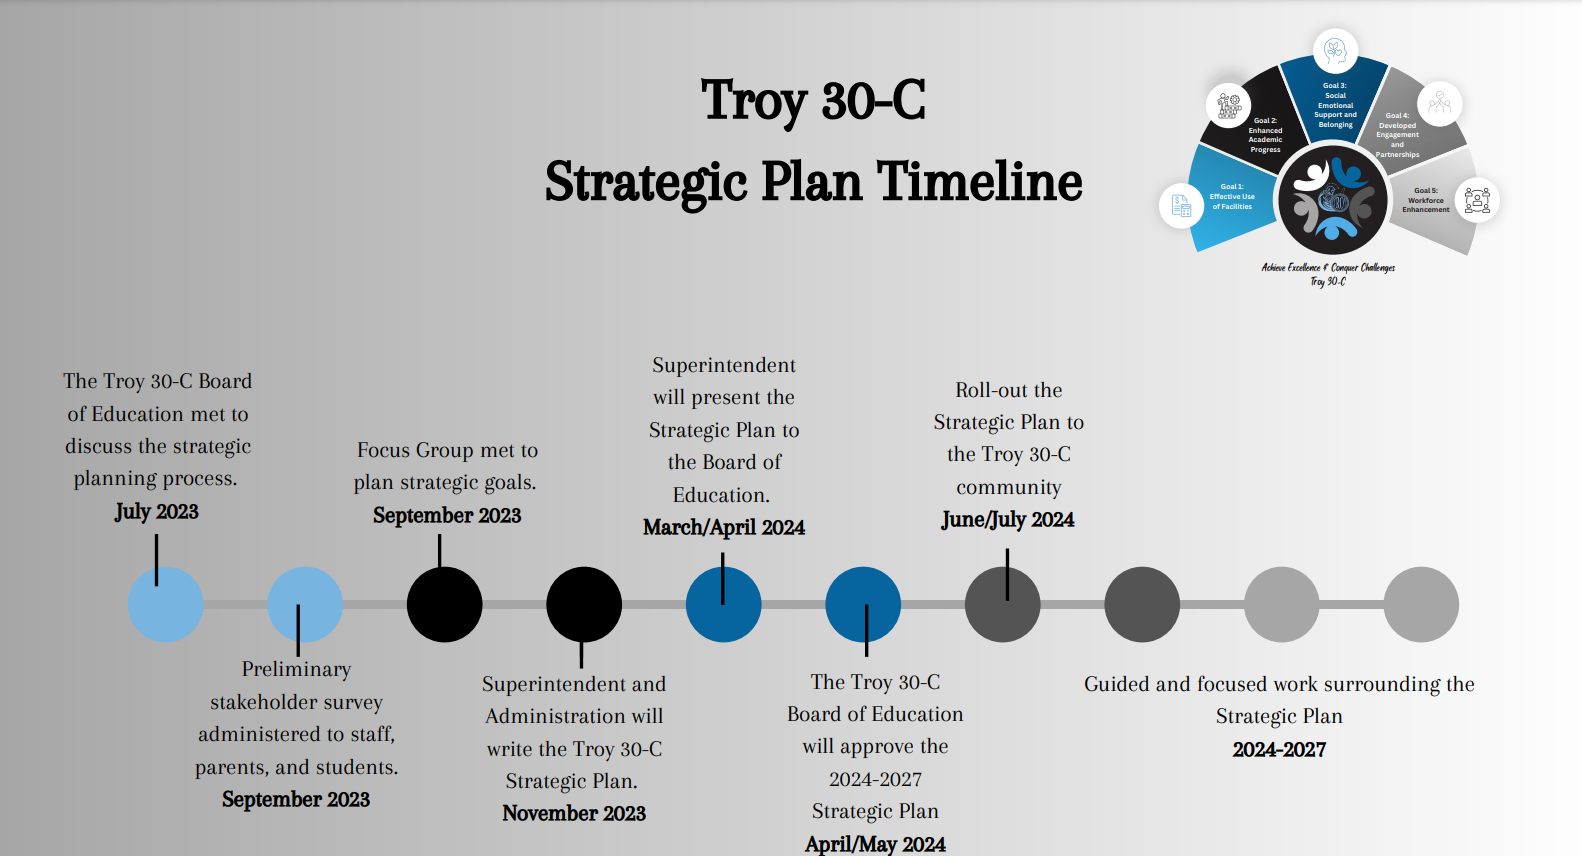 Troy 30-C Strategic Planning Timeline July 2023 through June/July 2024